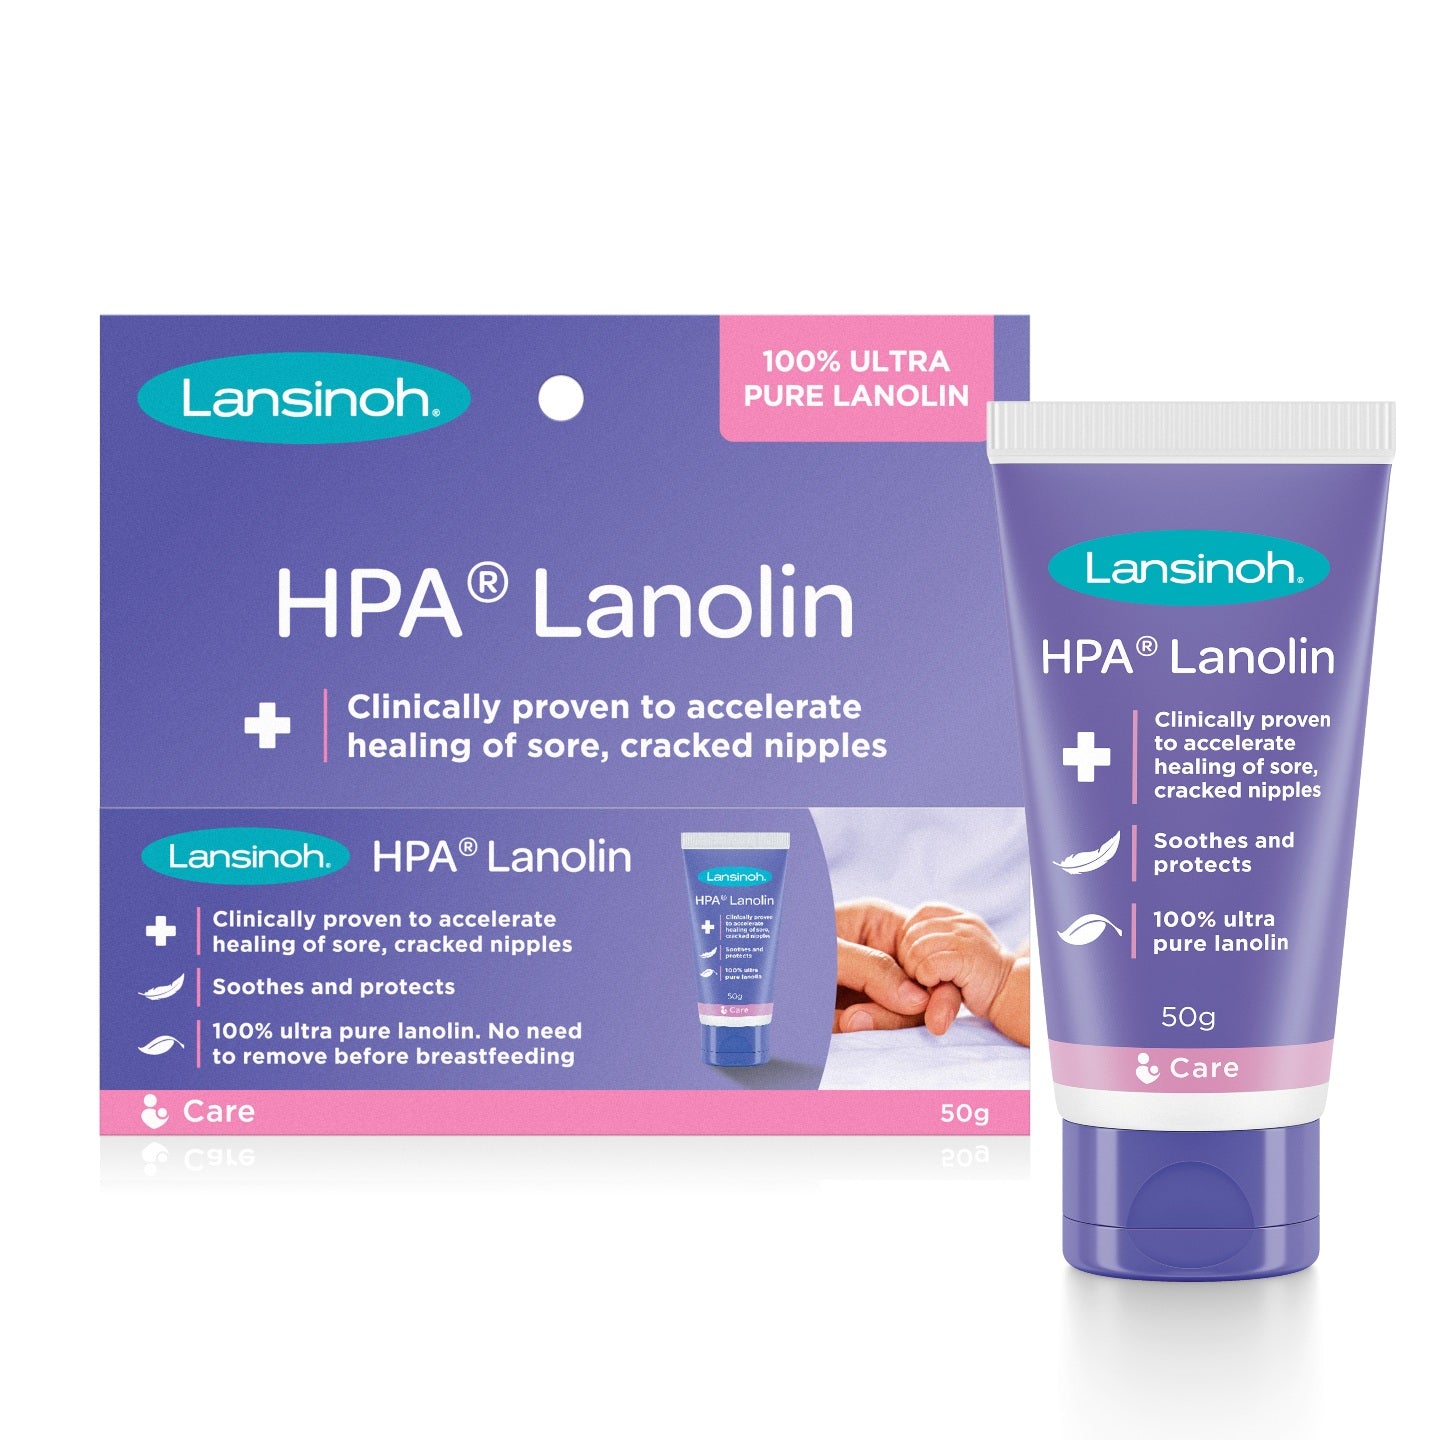 Lansinoh Lanolin Nipple Cream for Breastfeeding